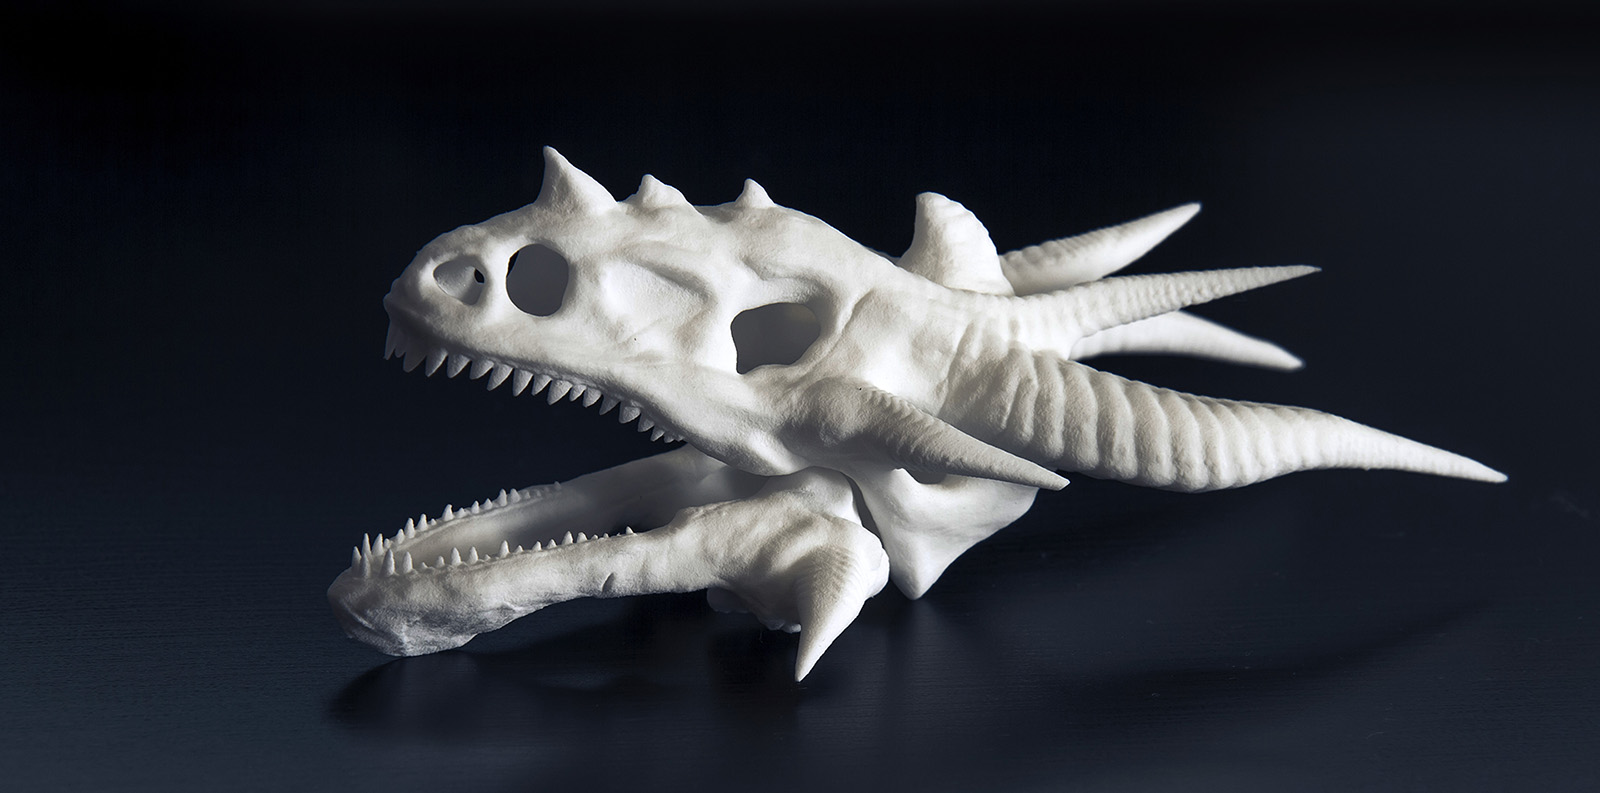 Dragon head 3D print by Smattila on DeviantArt